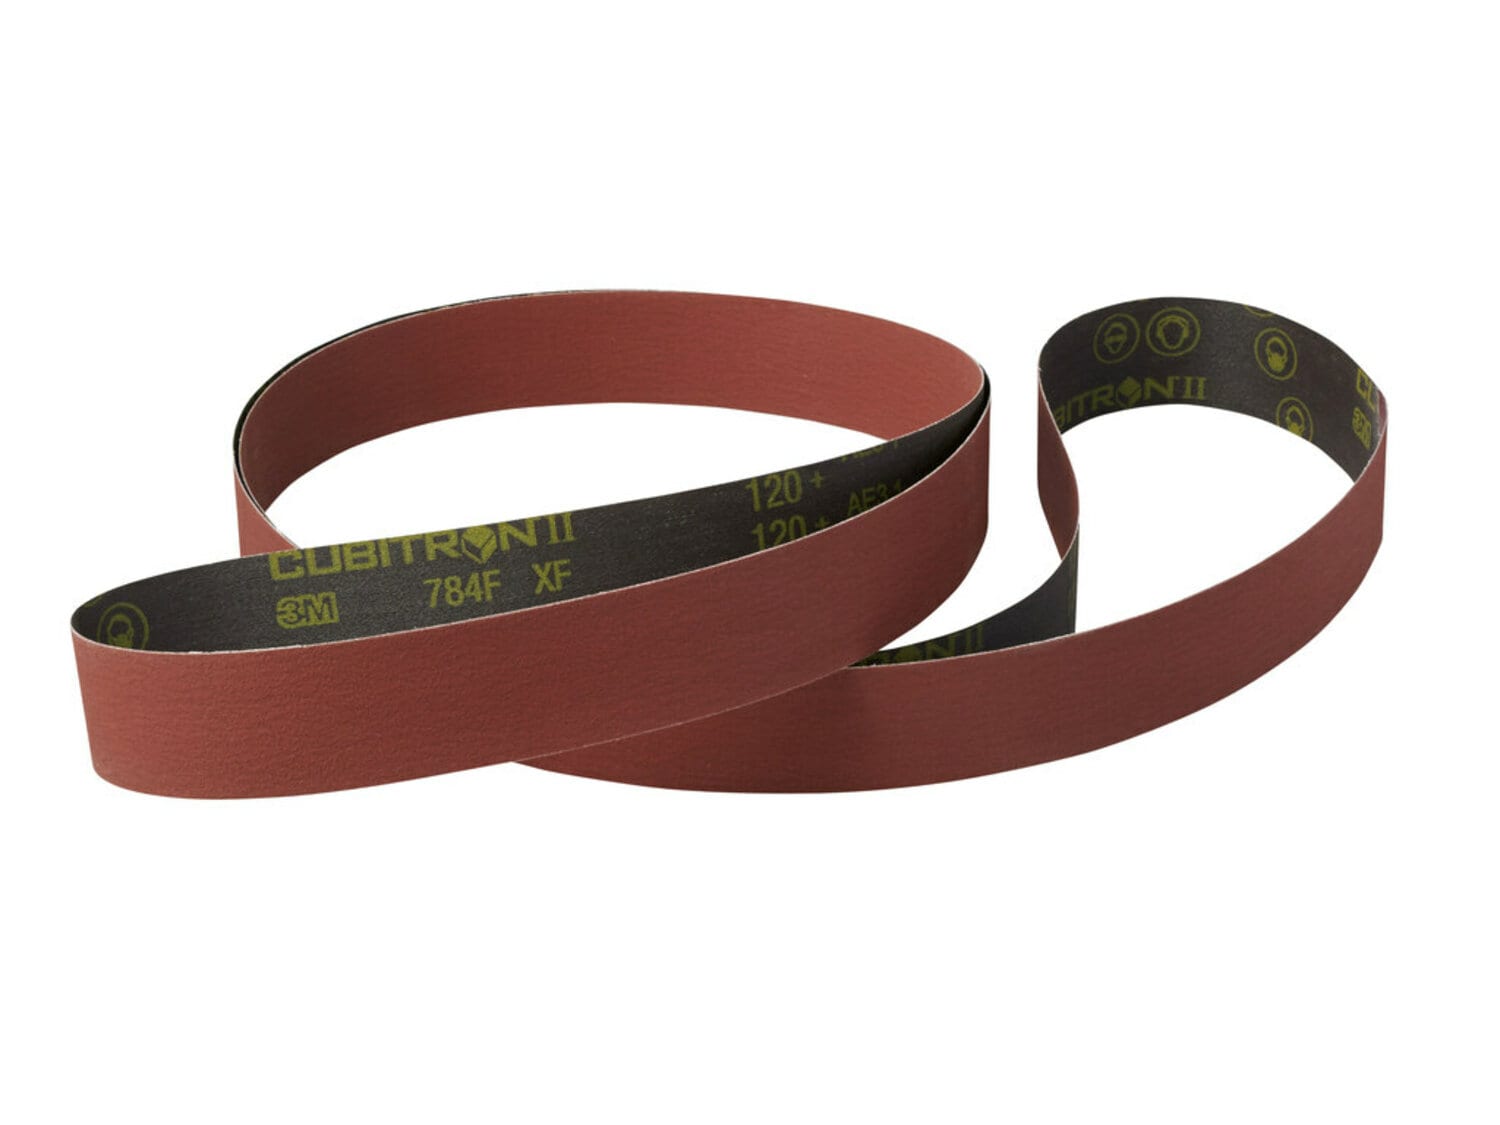 7100232695 - 3M Cubitron ll Cloth Belt 784F, 80+ YF-weight, 13 in x 75 in, Film-
lok, Single-flex